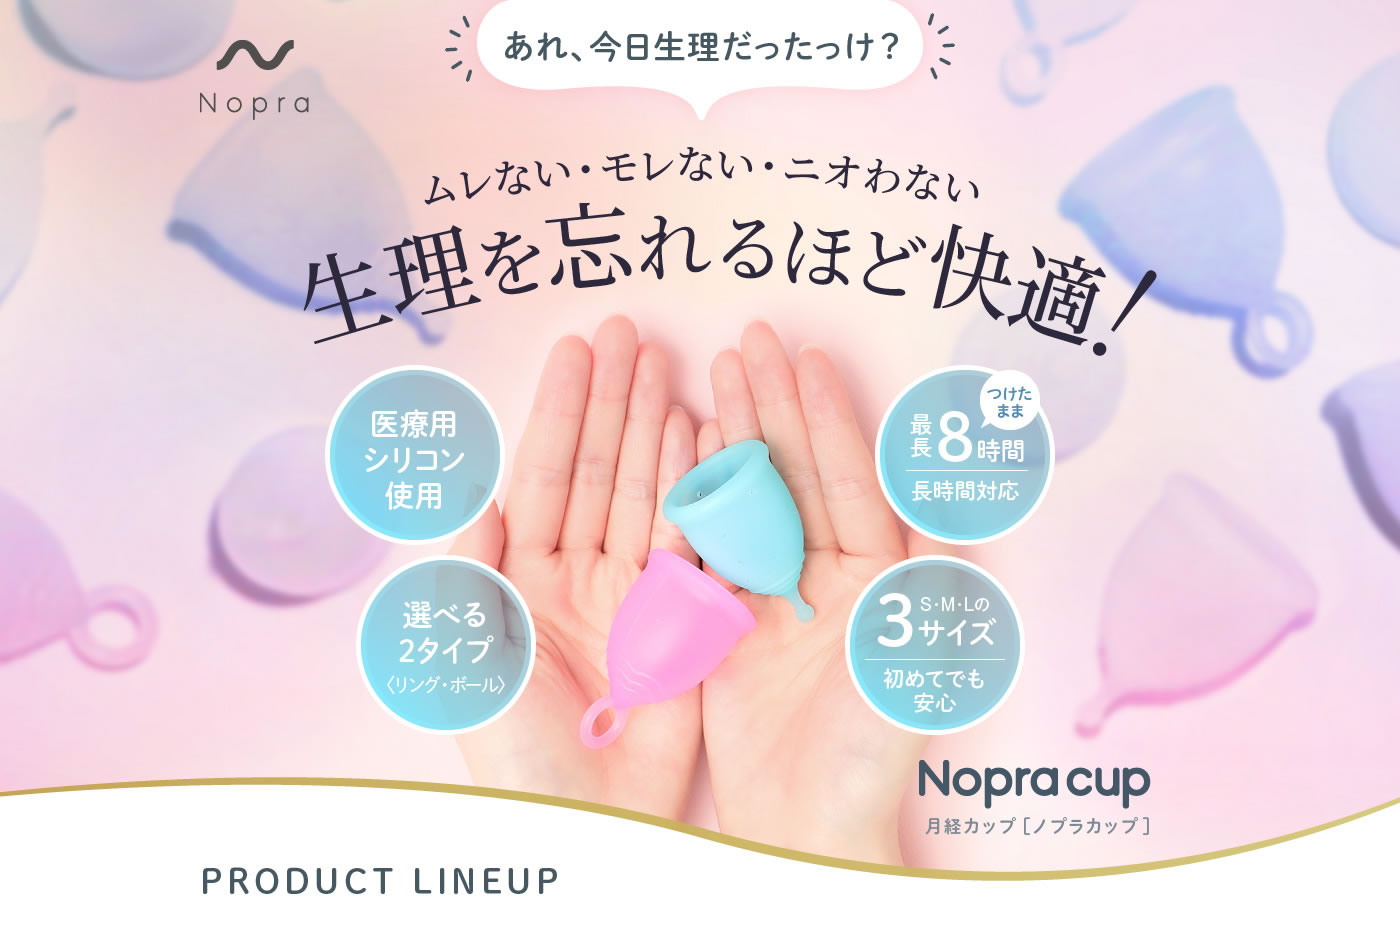 Nopra Cup リング型 ノプラカップ 月経カップ